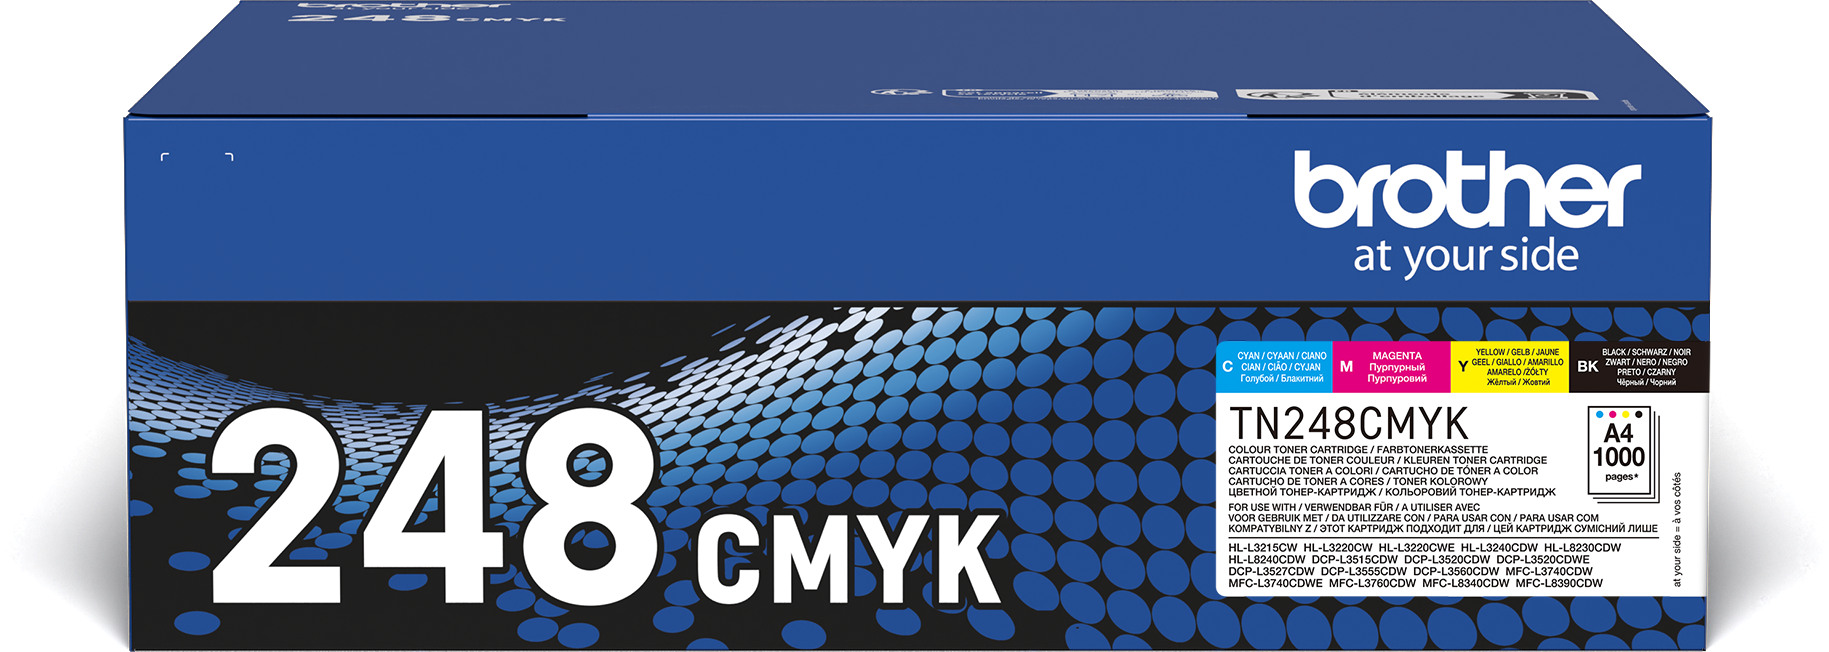 BROTHER Toner Valuepack CMYK TN-248CMYKHL-L8240CDW 1000 Seiten